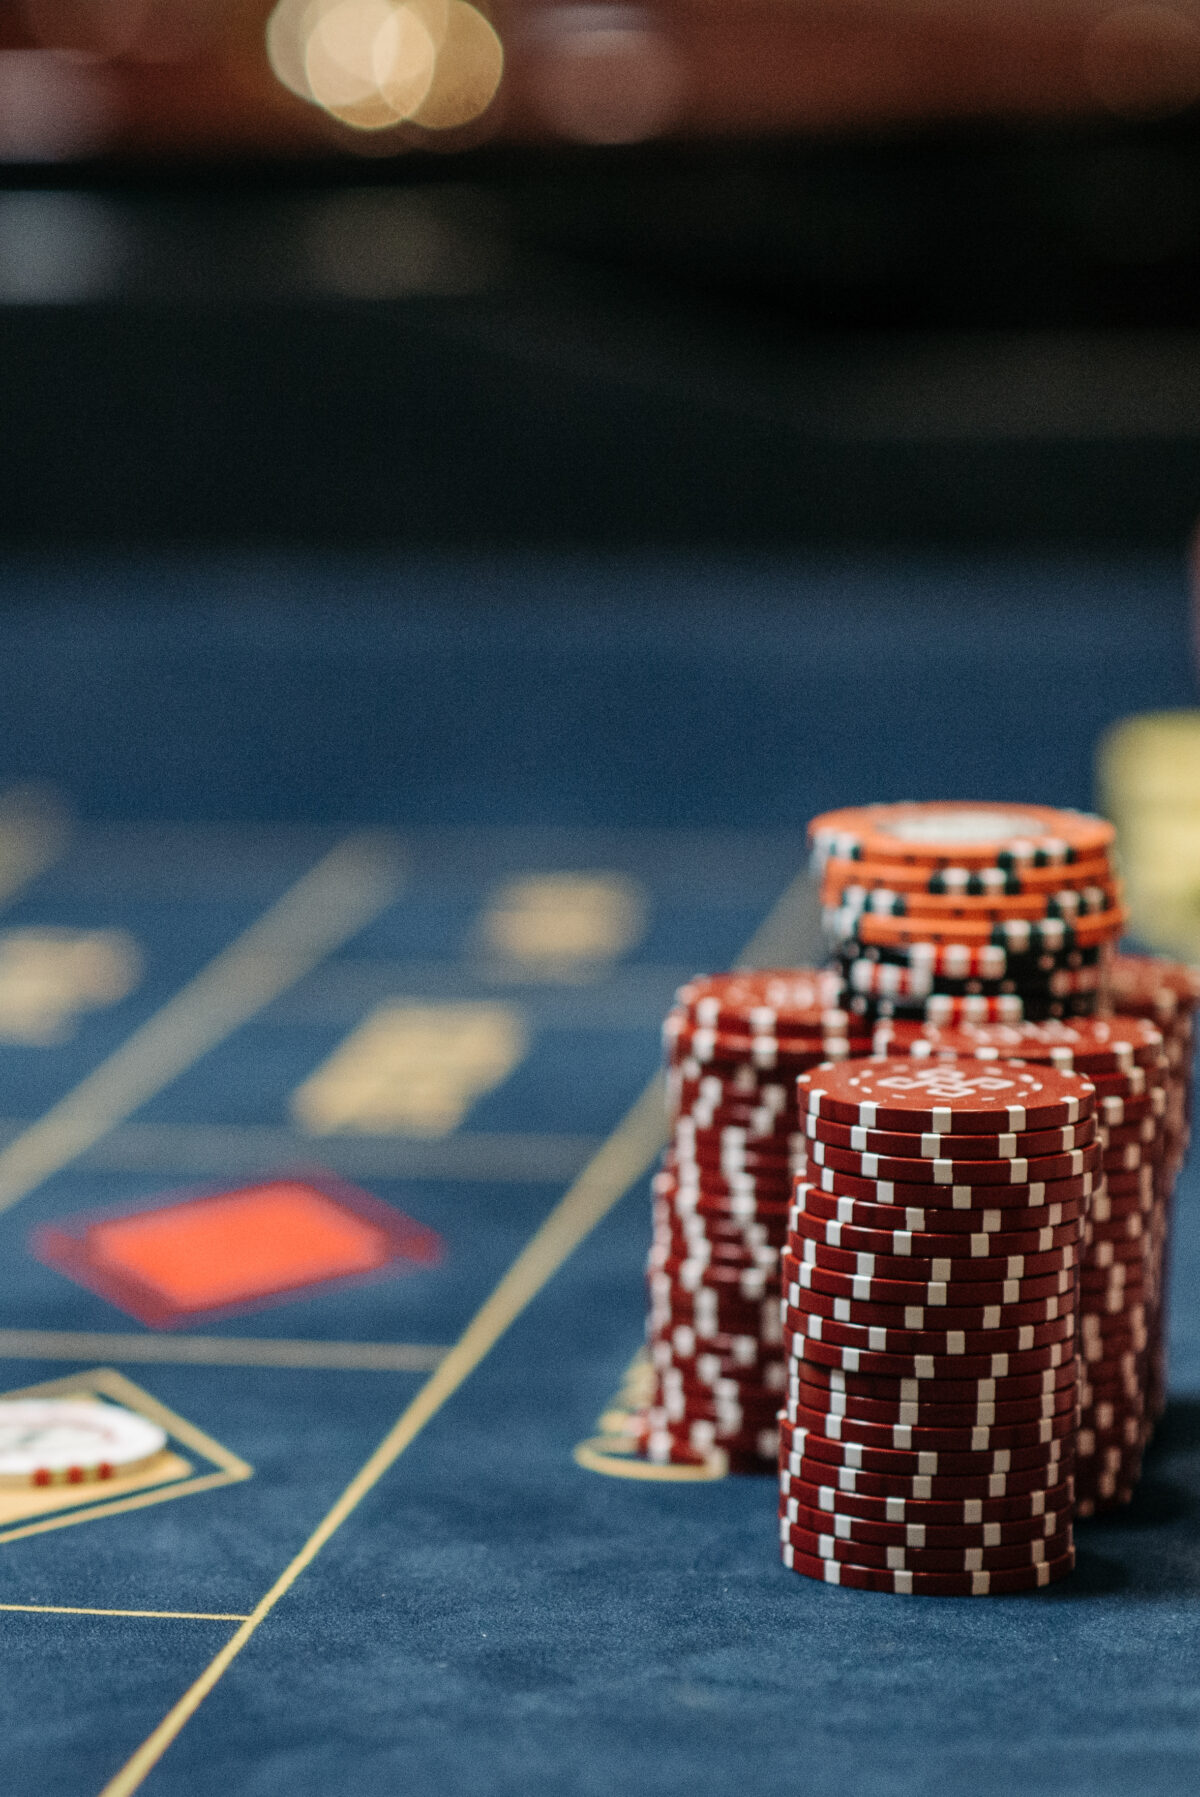 Online casino – sådan træffer du de rette beslutninger